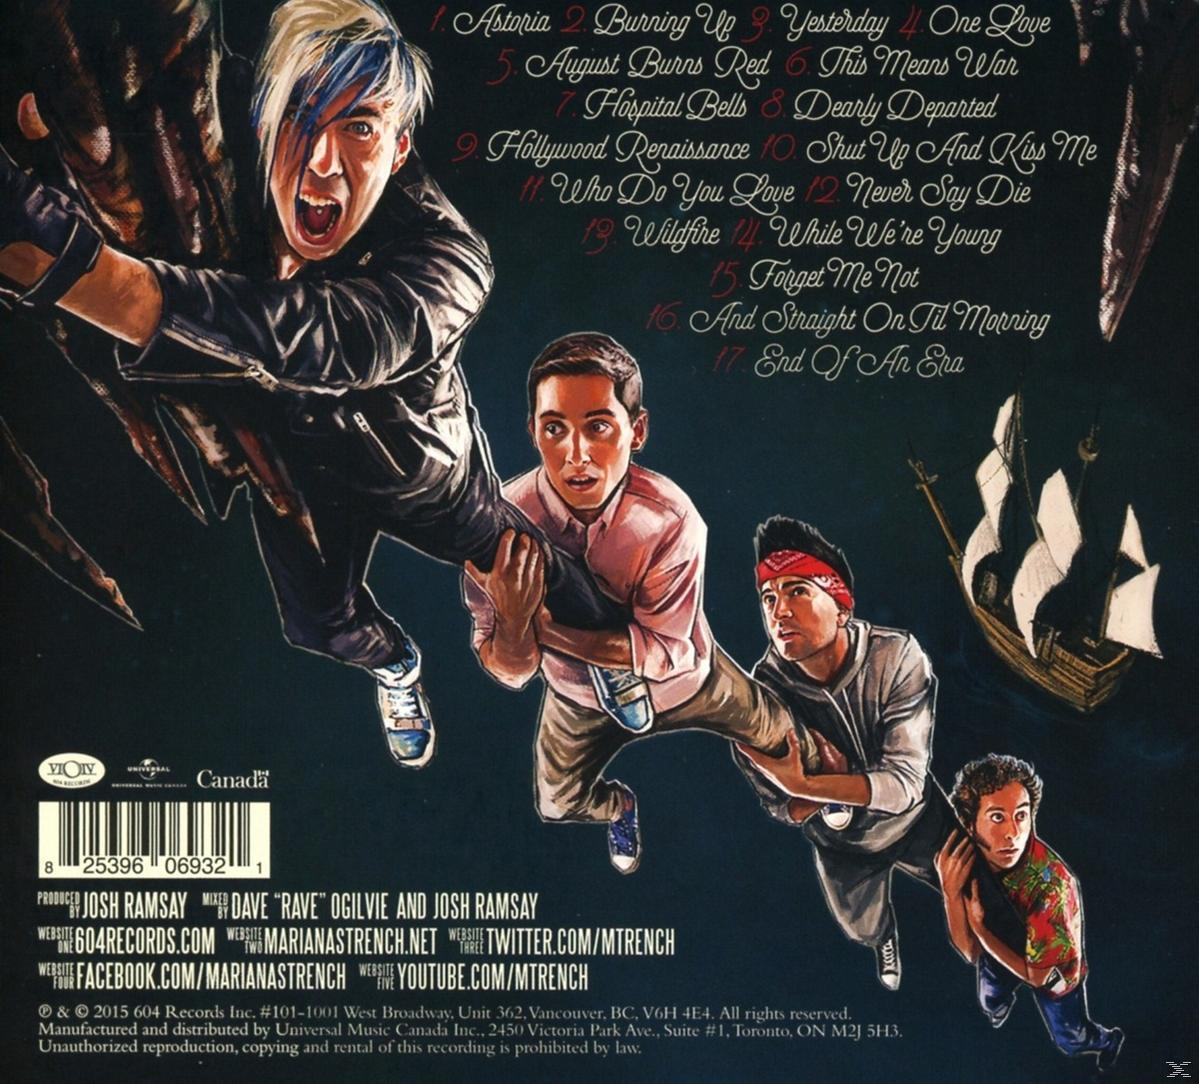 Astoria - Marianas Trench (CD) (Digipak) -